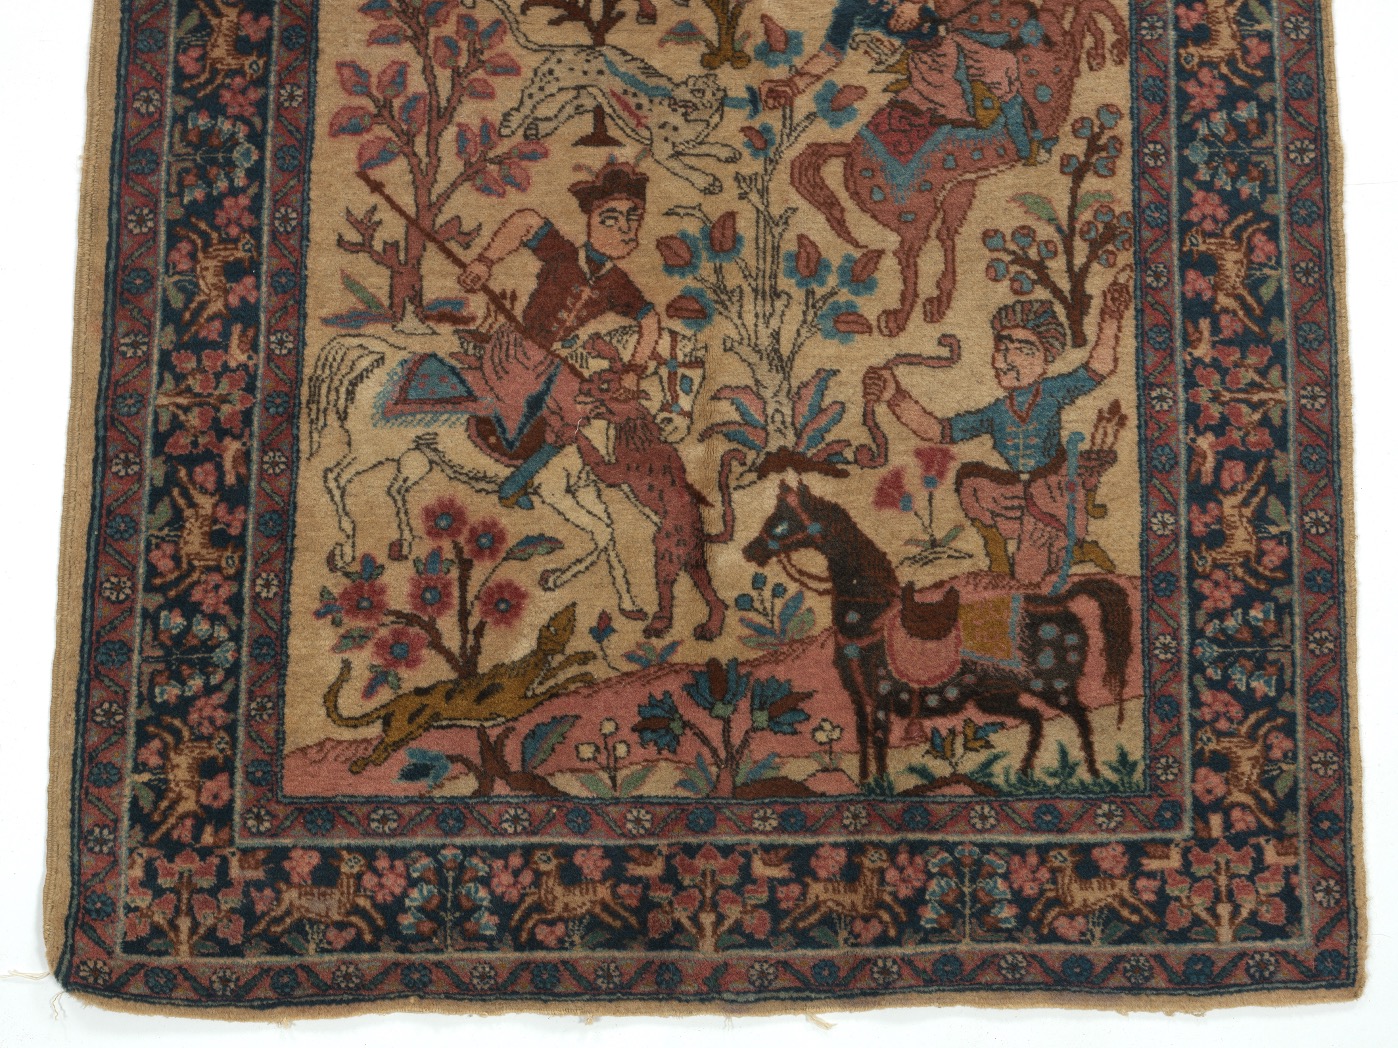 Tabriz Pictorial Hunting Carpet after 16th Century Safavid Design, ca. 1920's - Image 2 of 5